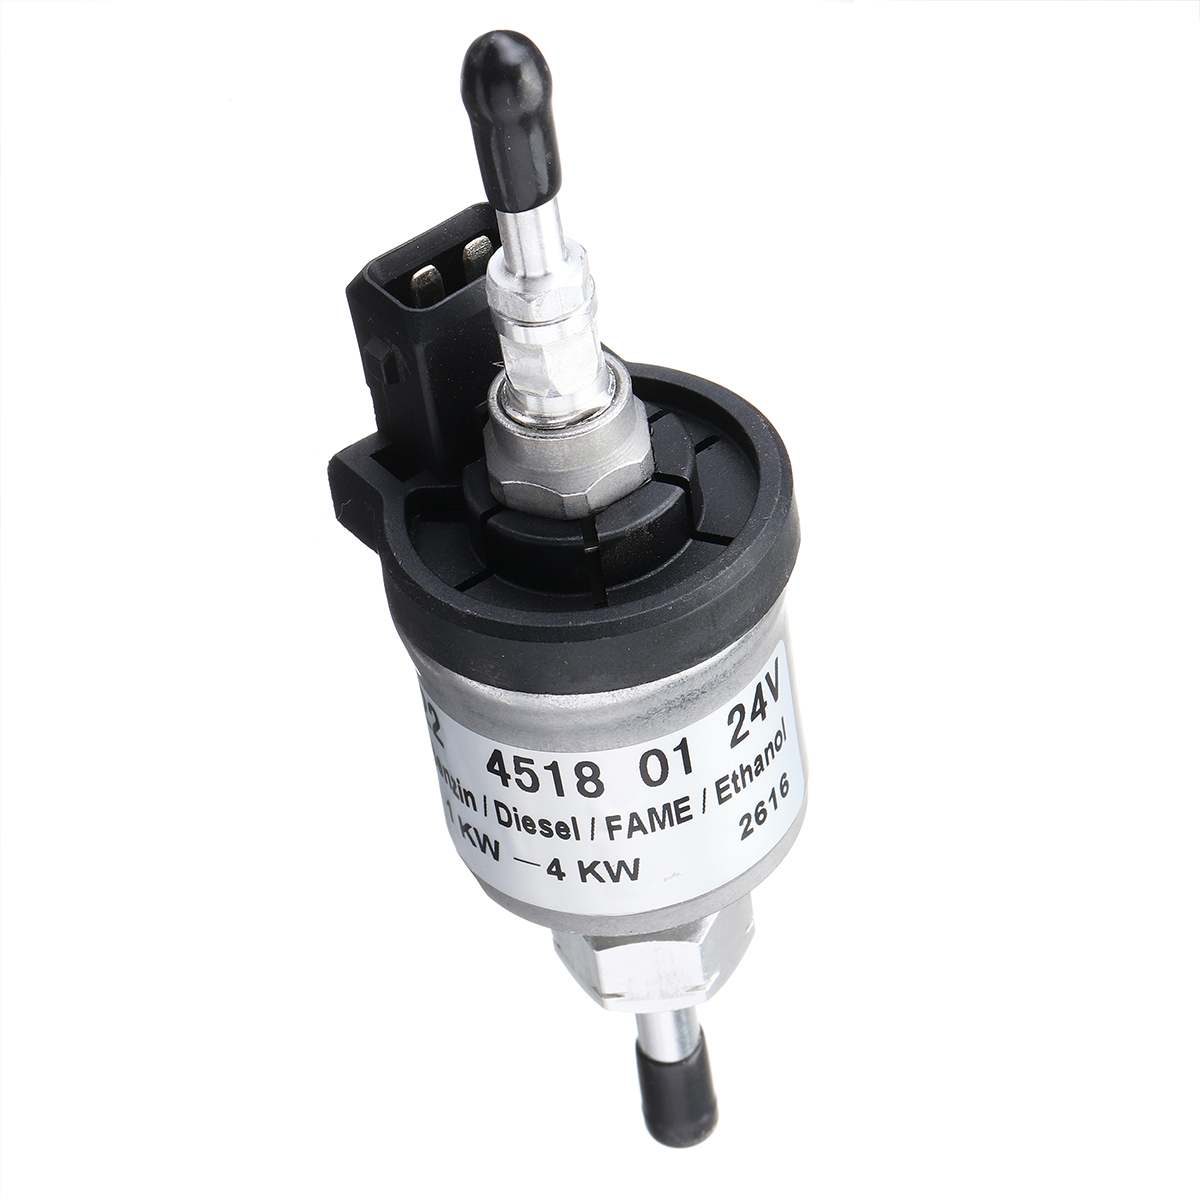 Fuel-Metering-Pump-Diesel-Heater-For-12V24V-1KW-4KW-Car-Air-Heater-1605109-6